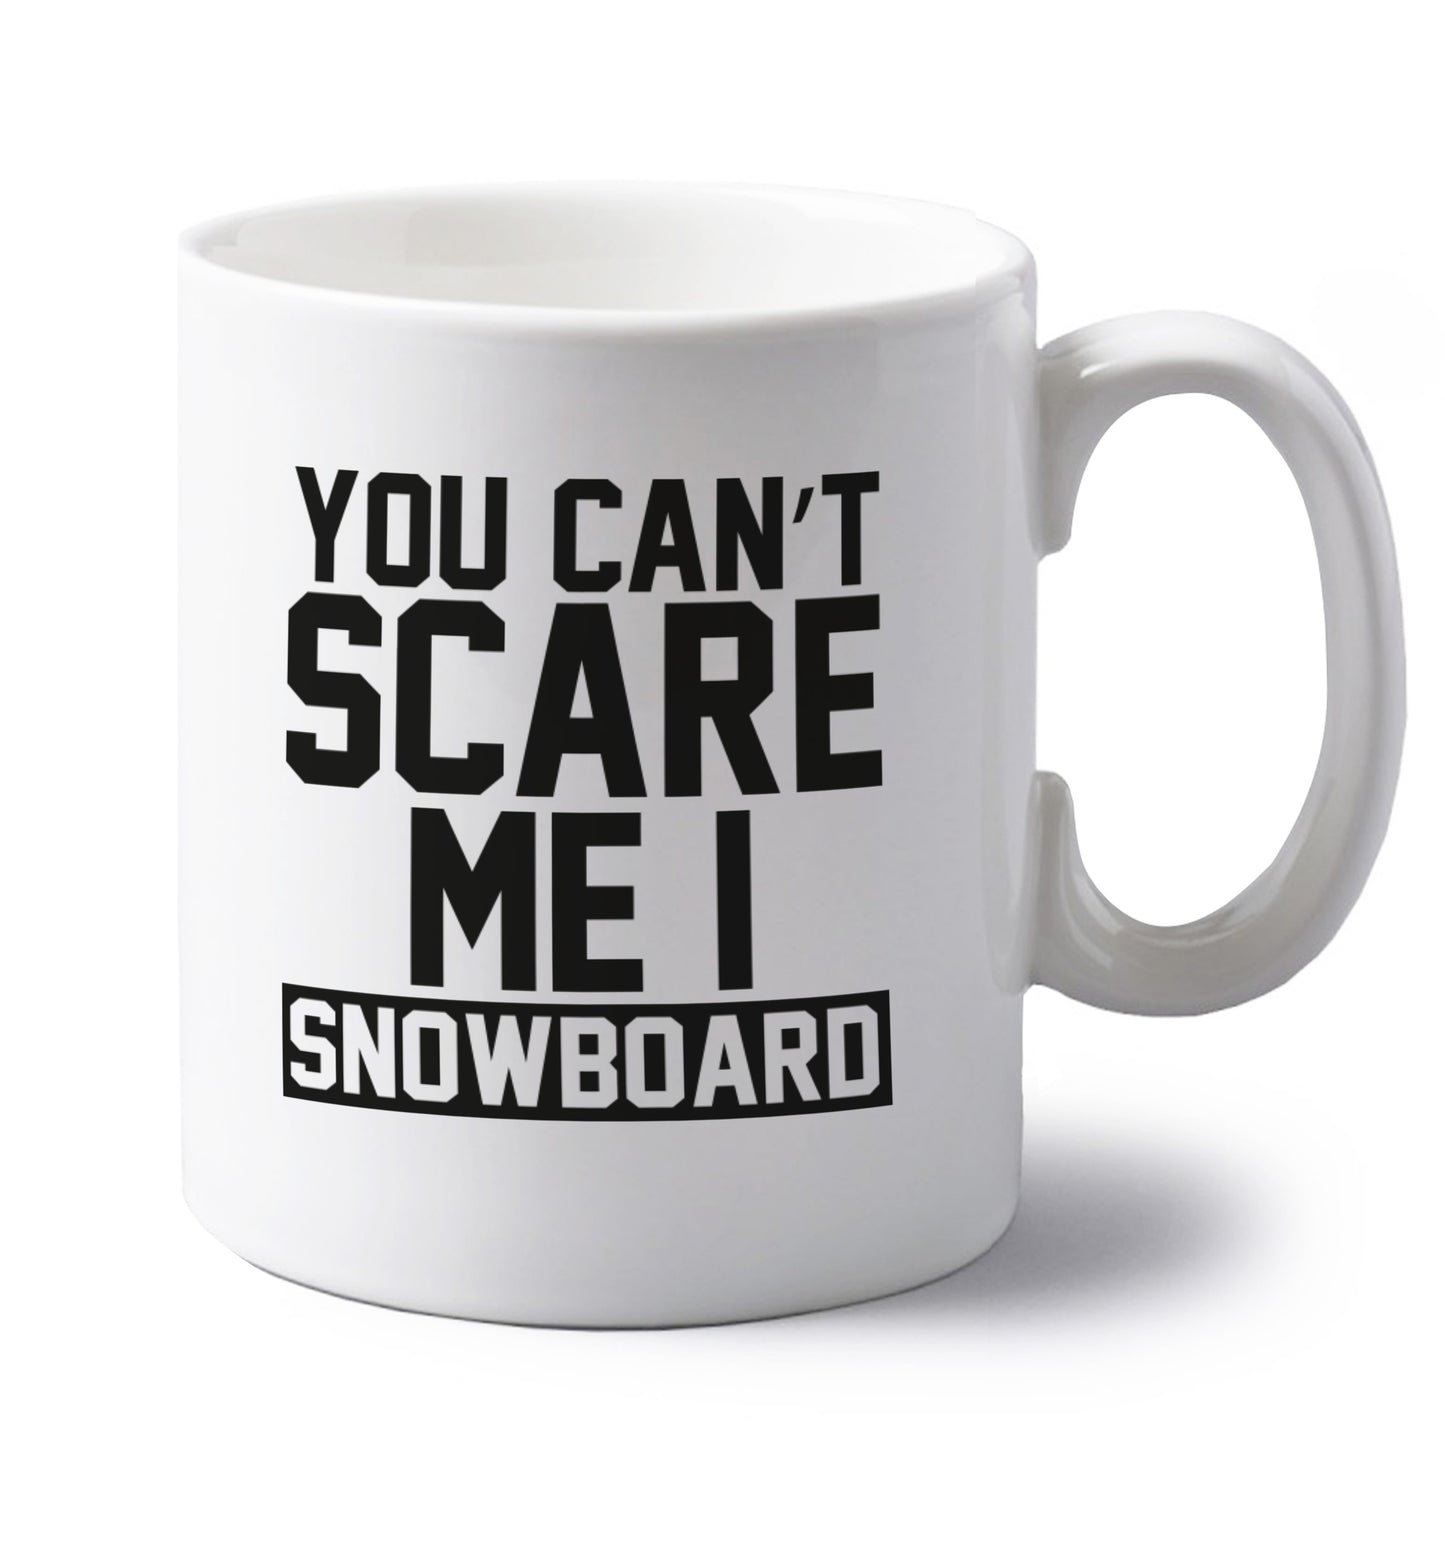 You can't scare me I snowboard left handed white ceramic mug 